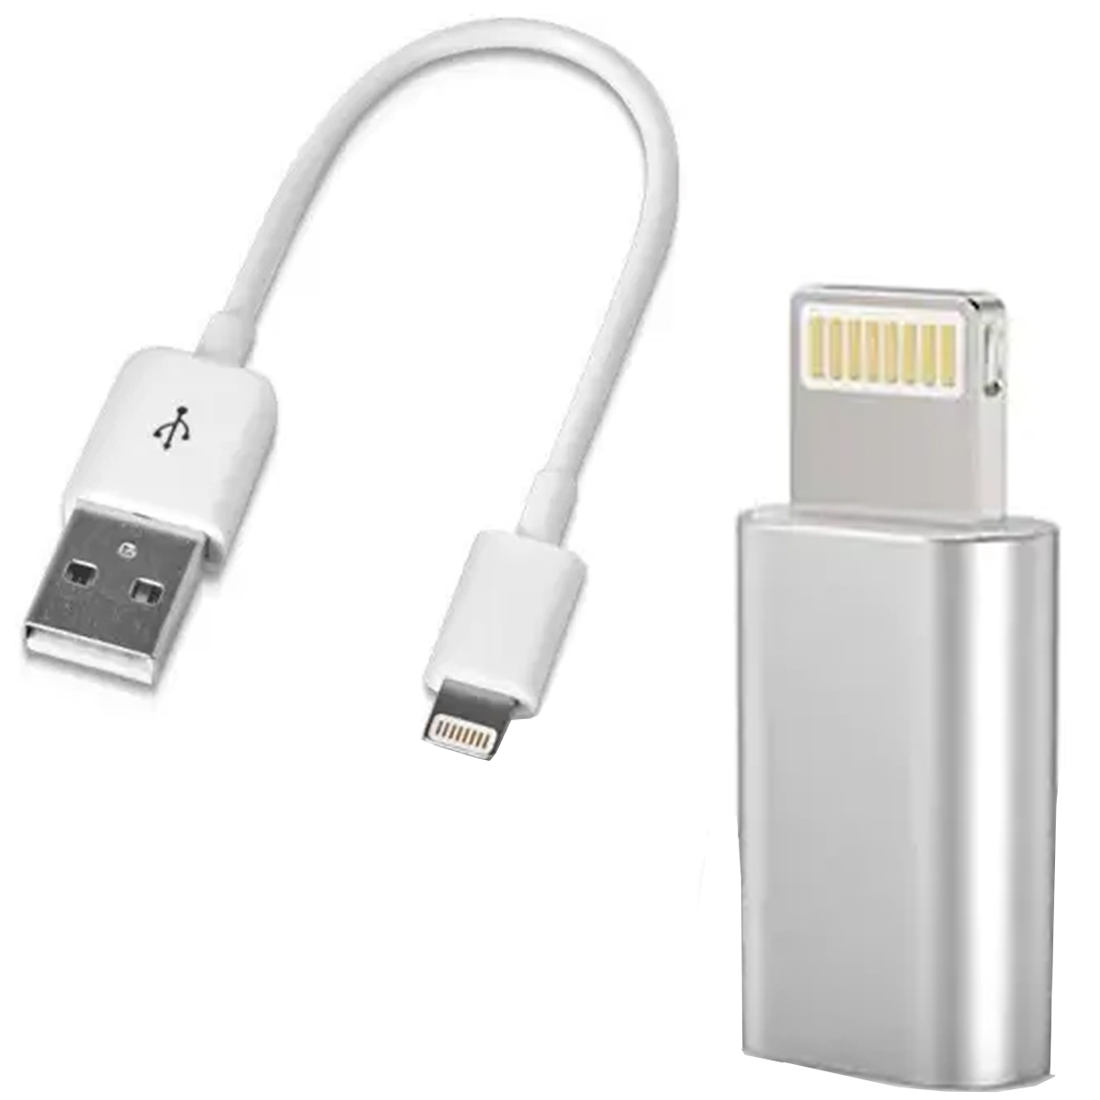 Eshopglee 8 Pin USB Short Charging Cable for i Phone + Micro USB to 8 Pin Adapter